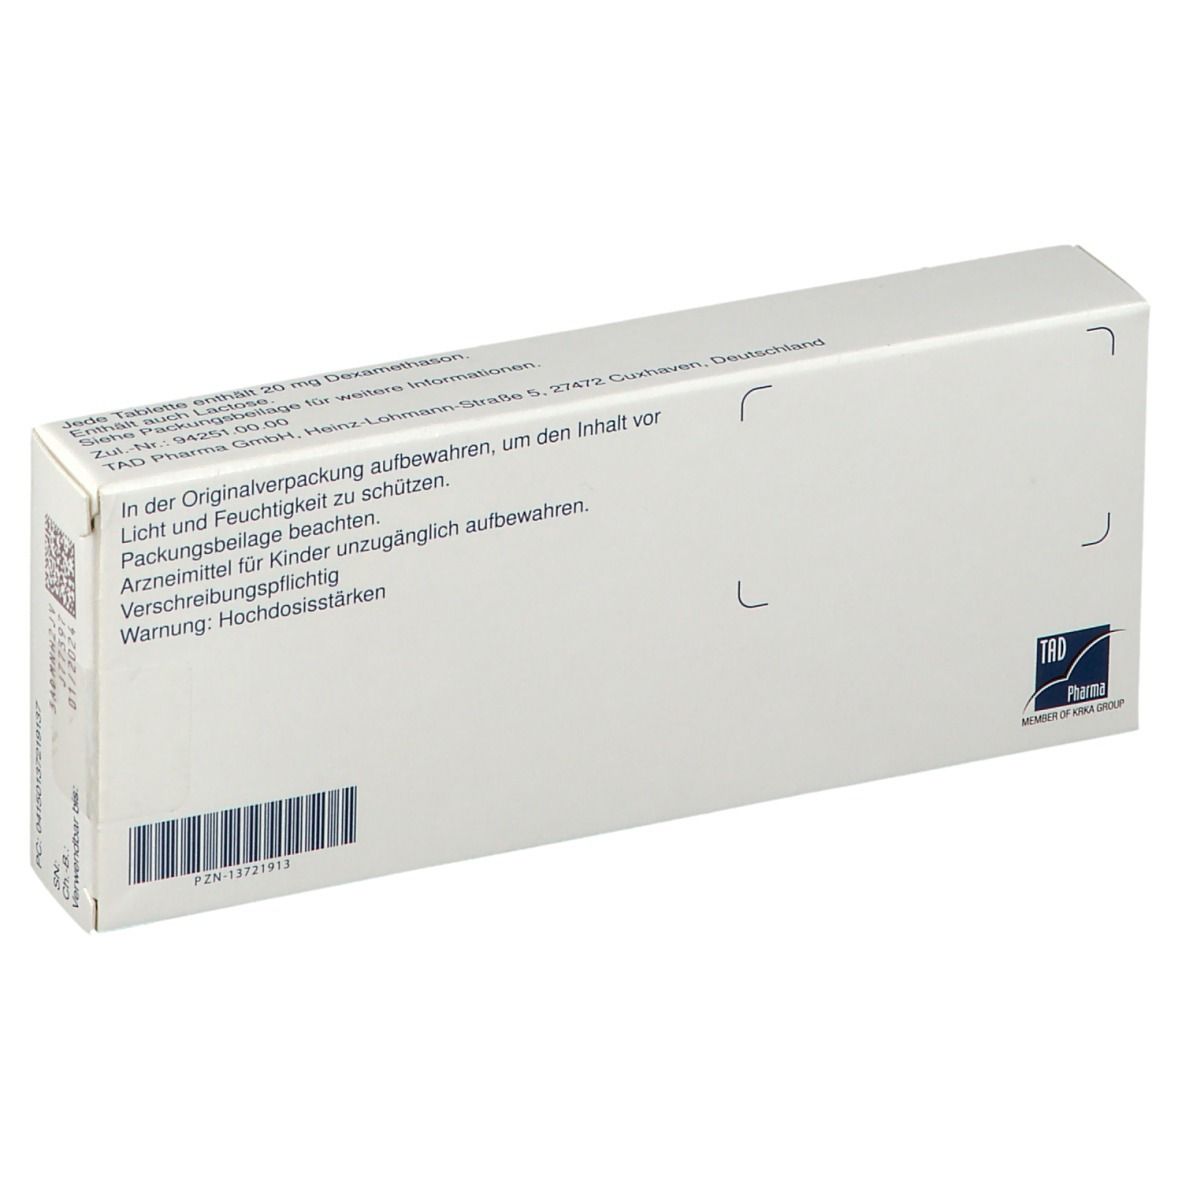 Dexamethason TAD® 20 mg